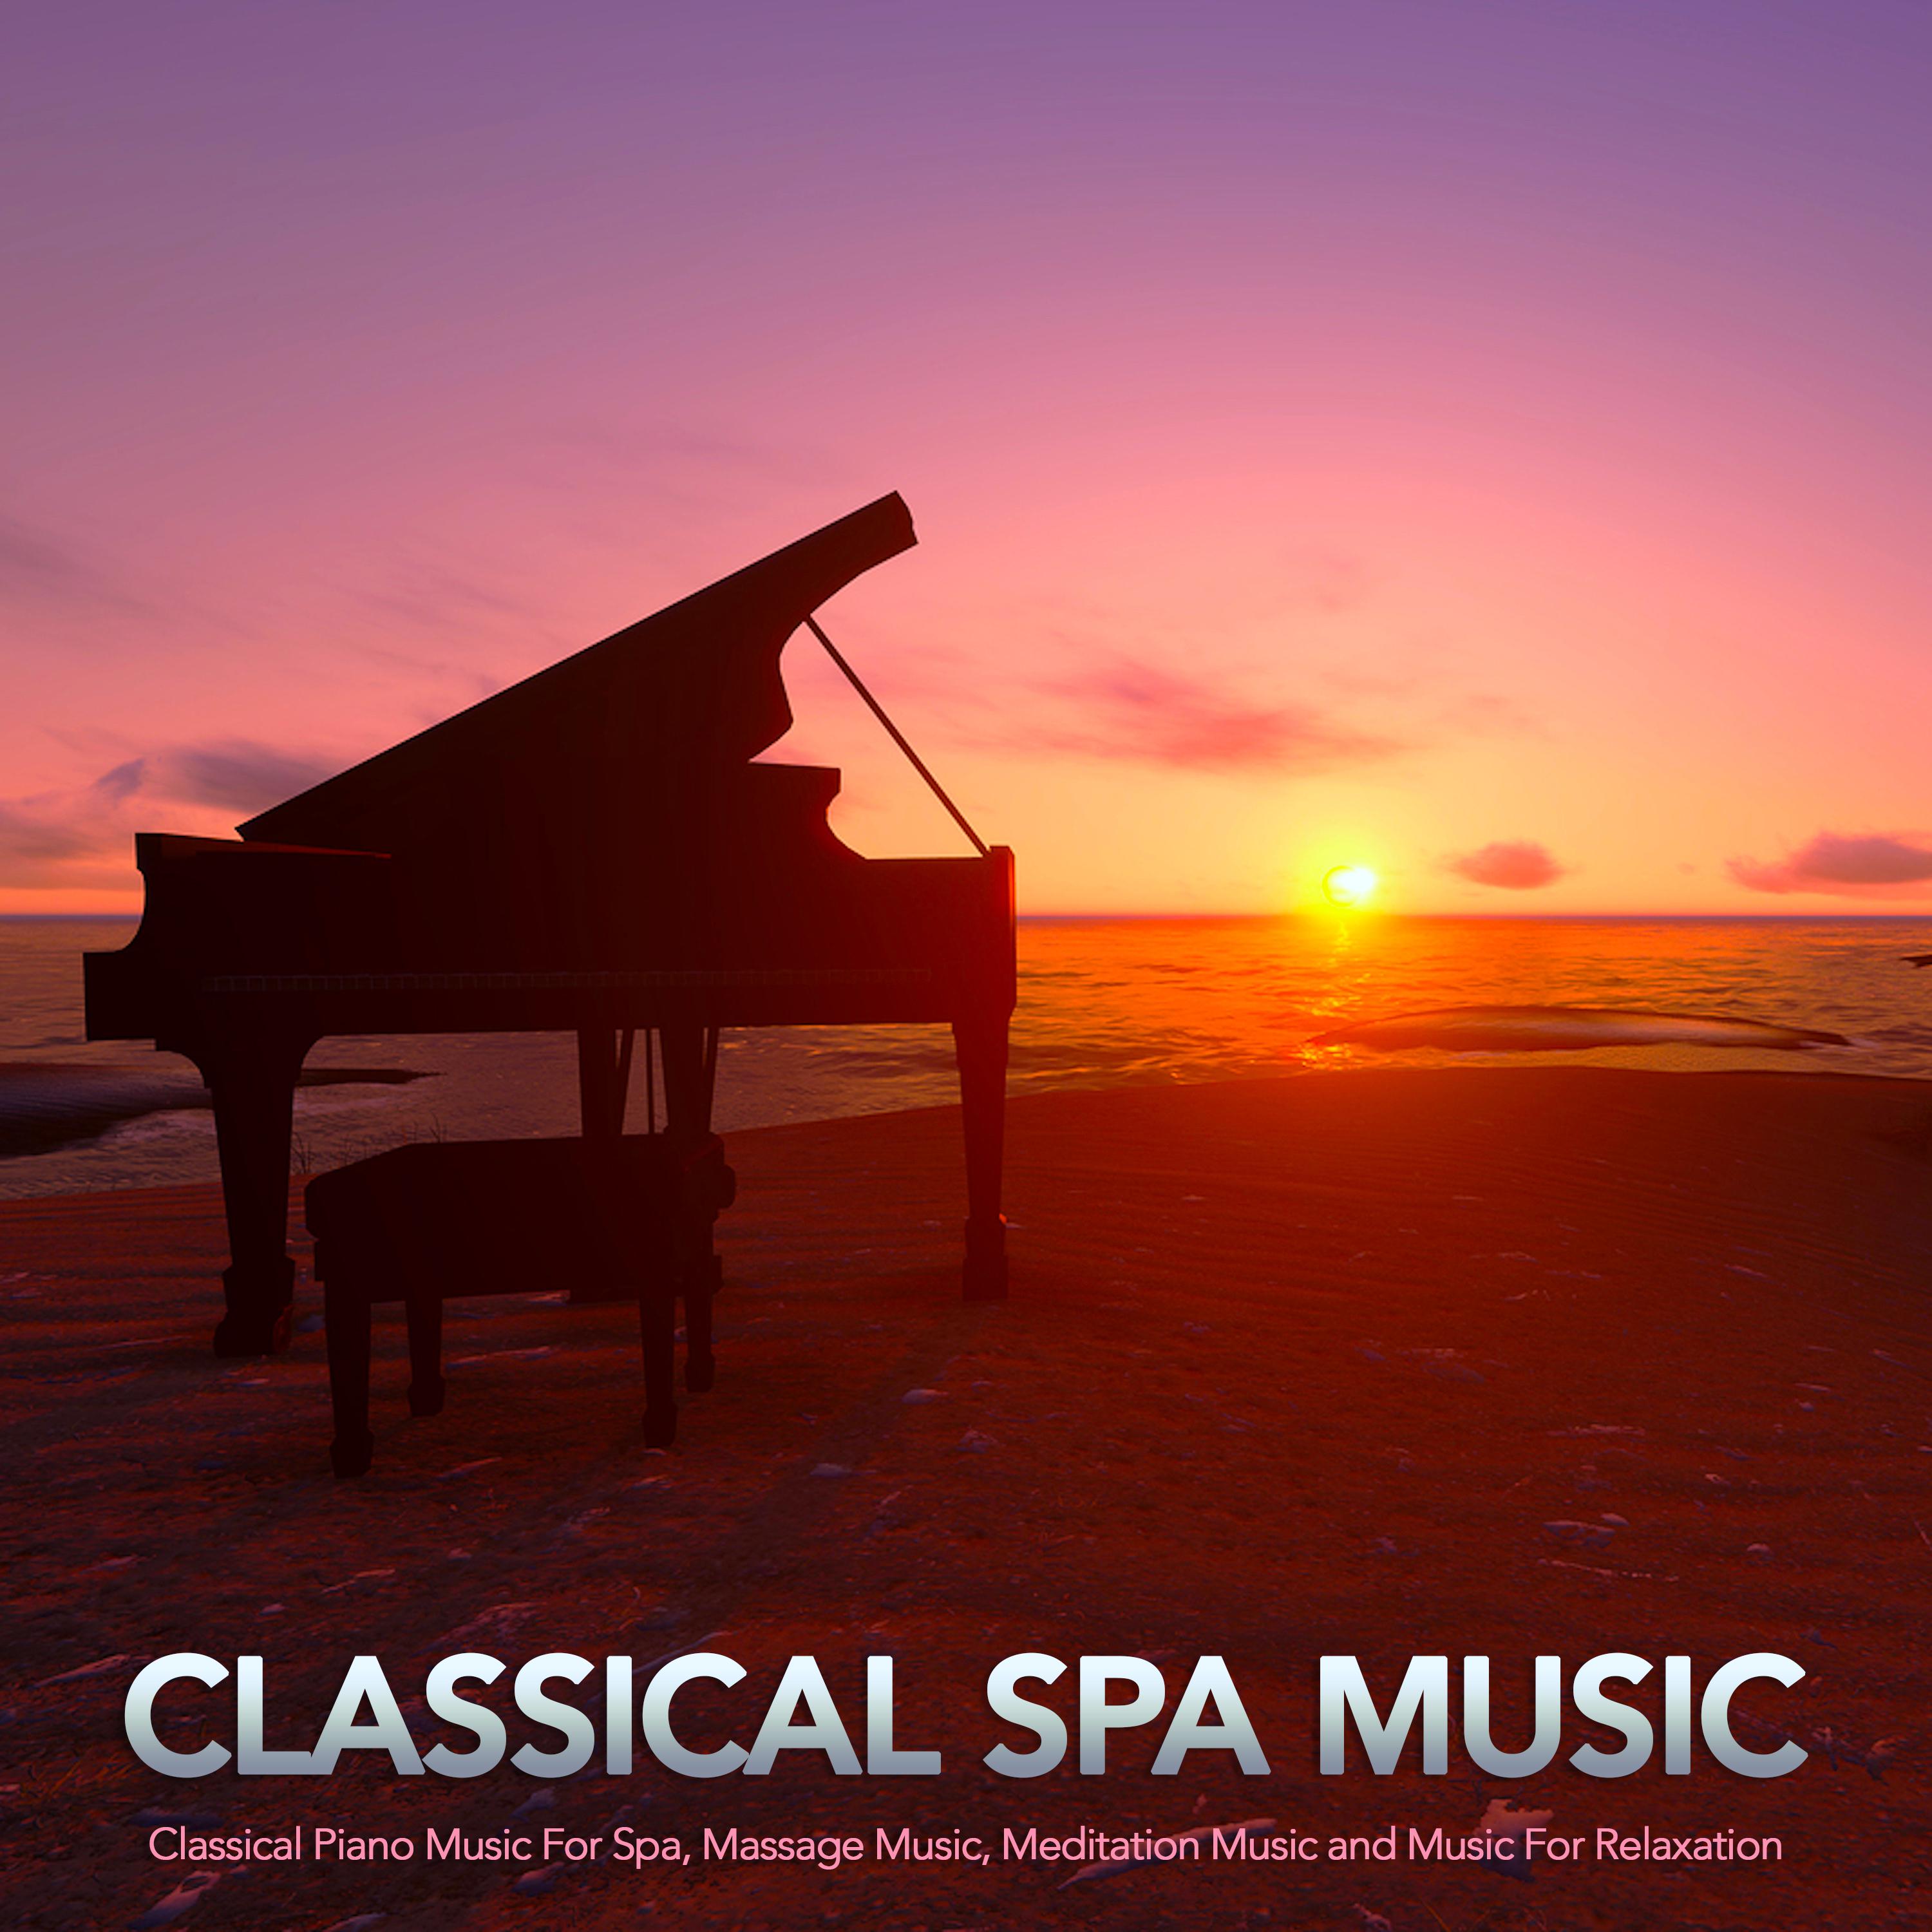 Nocturne - Chopin - Classical Piano Music - Spa Music